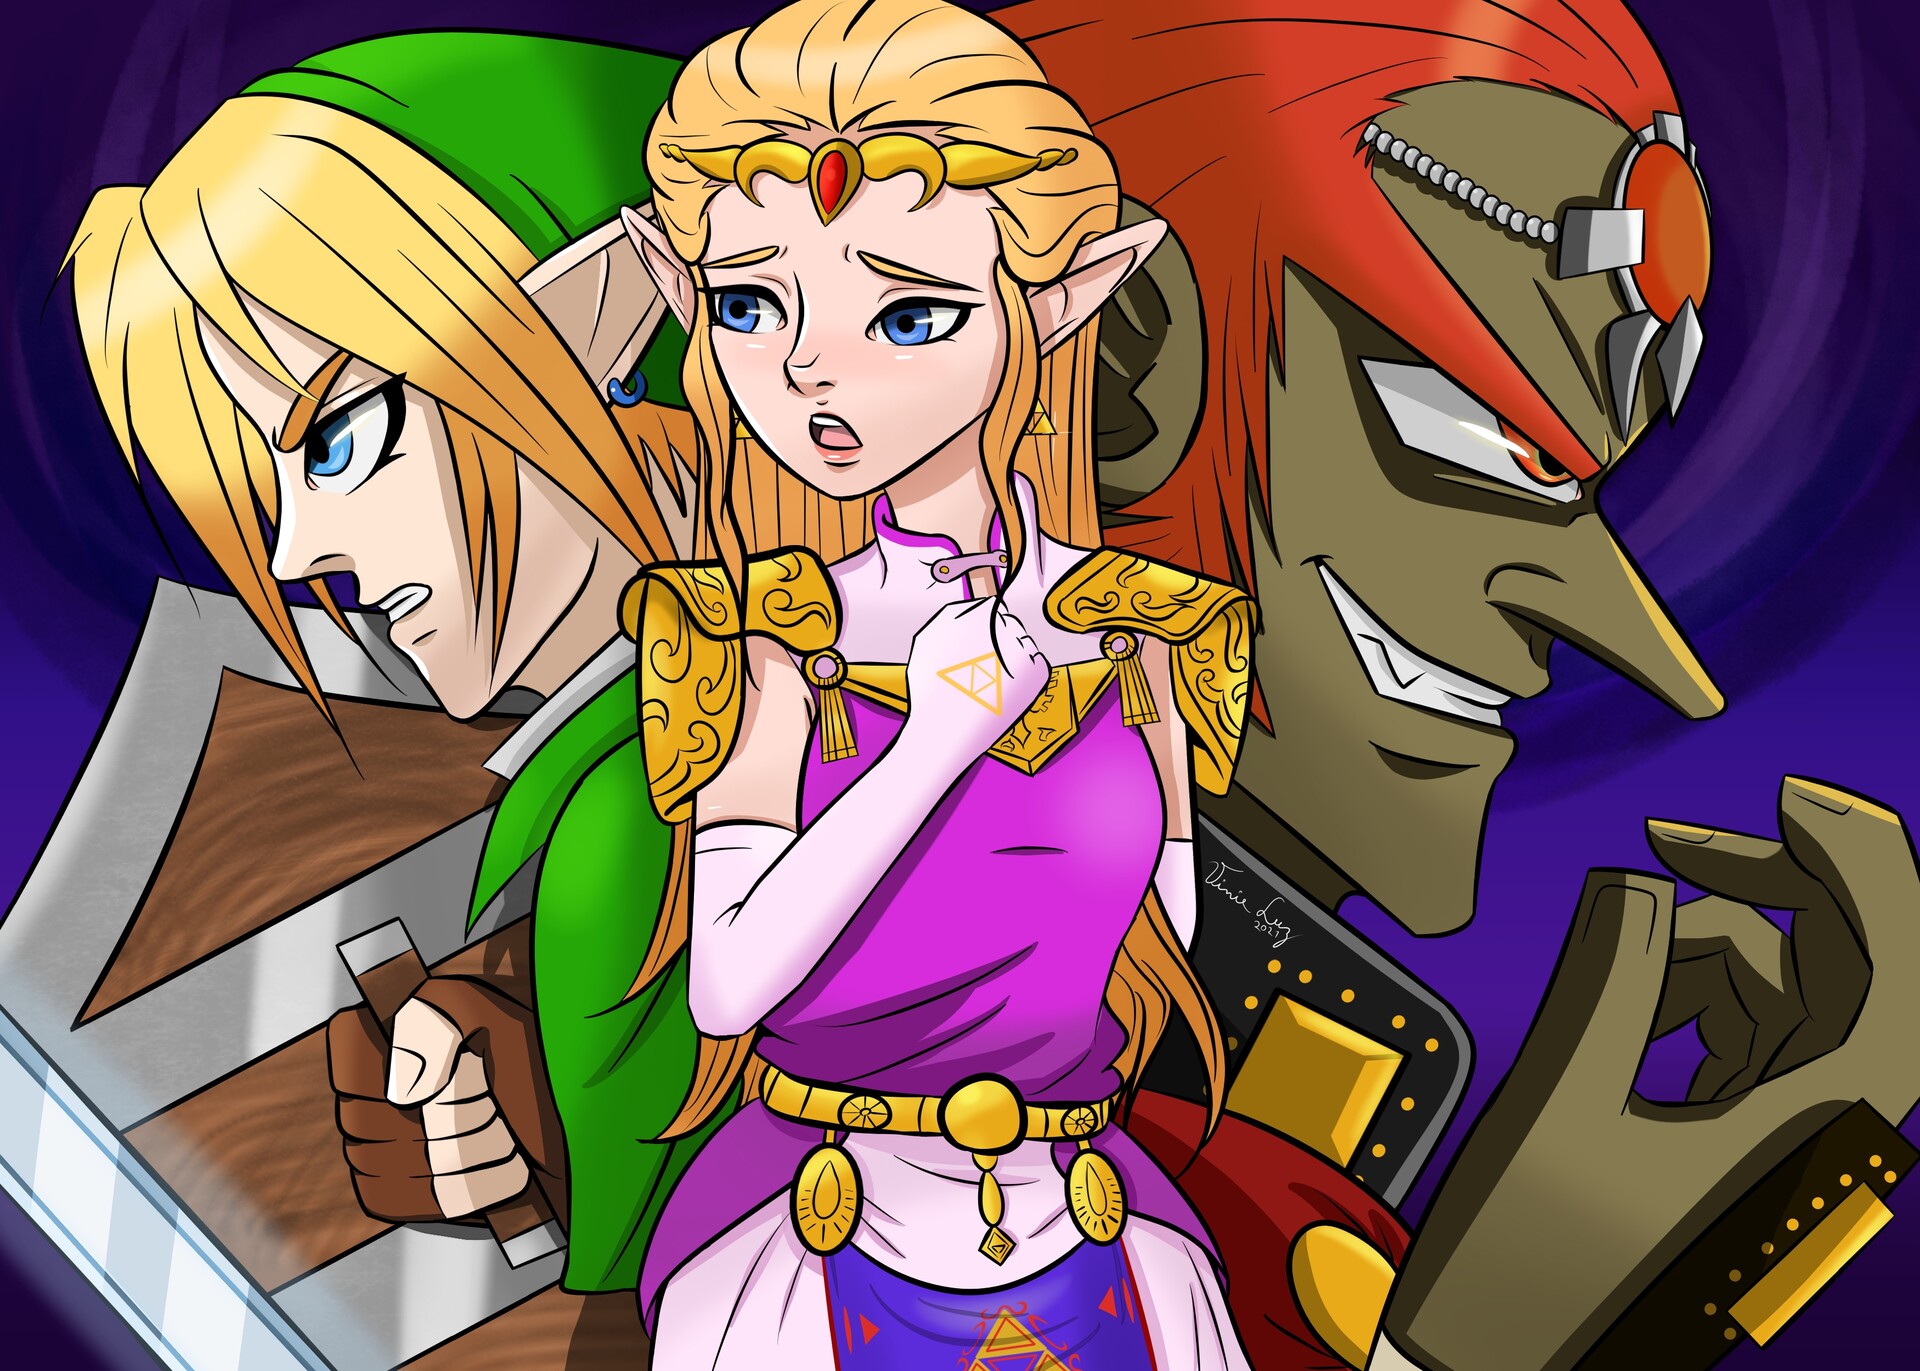 ArtStation - Zelda: A Link to the Past Fanart